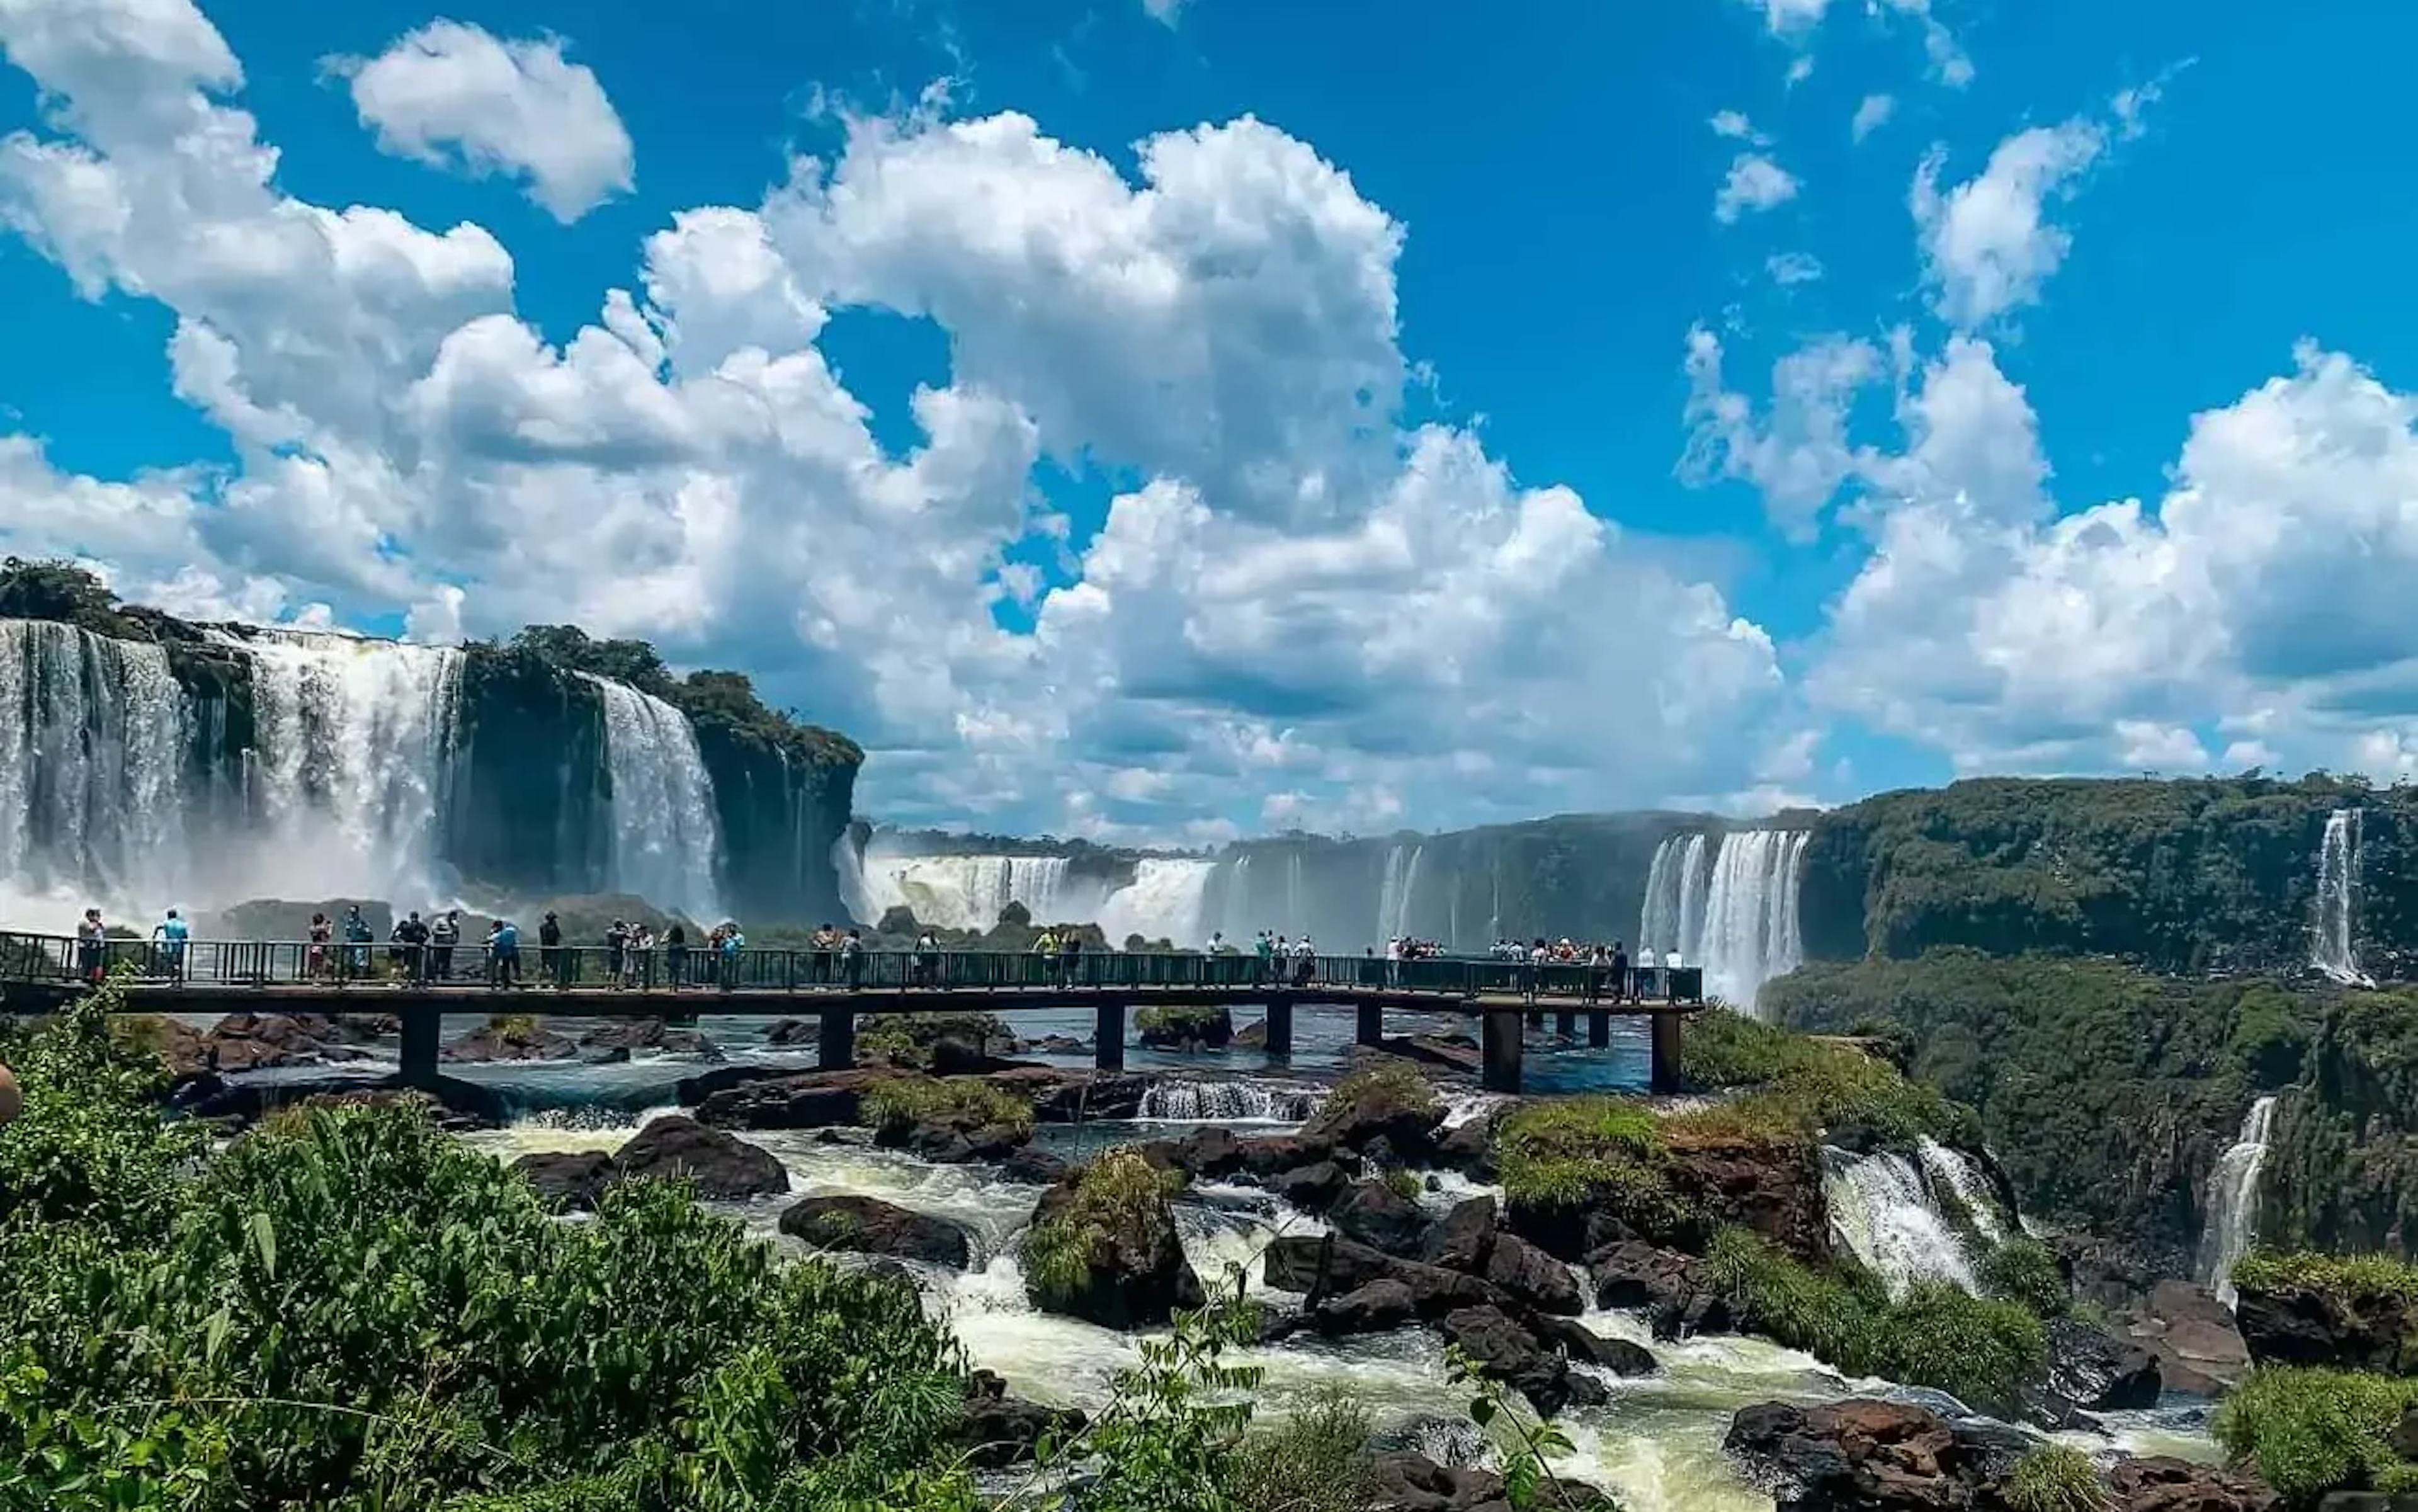 Picture taken in Foz do Iguaçu, Paraná